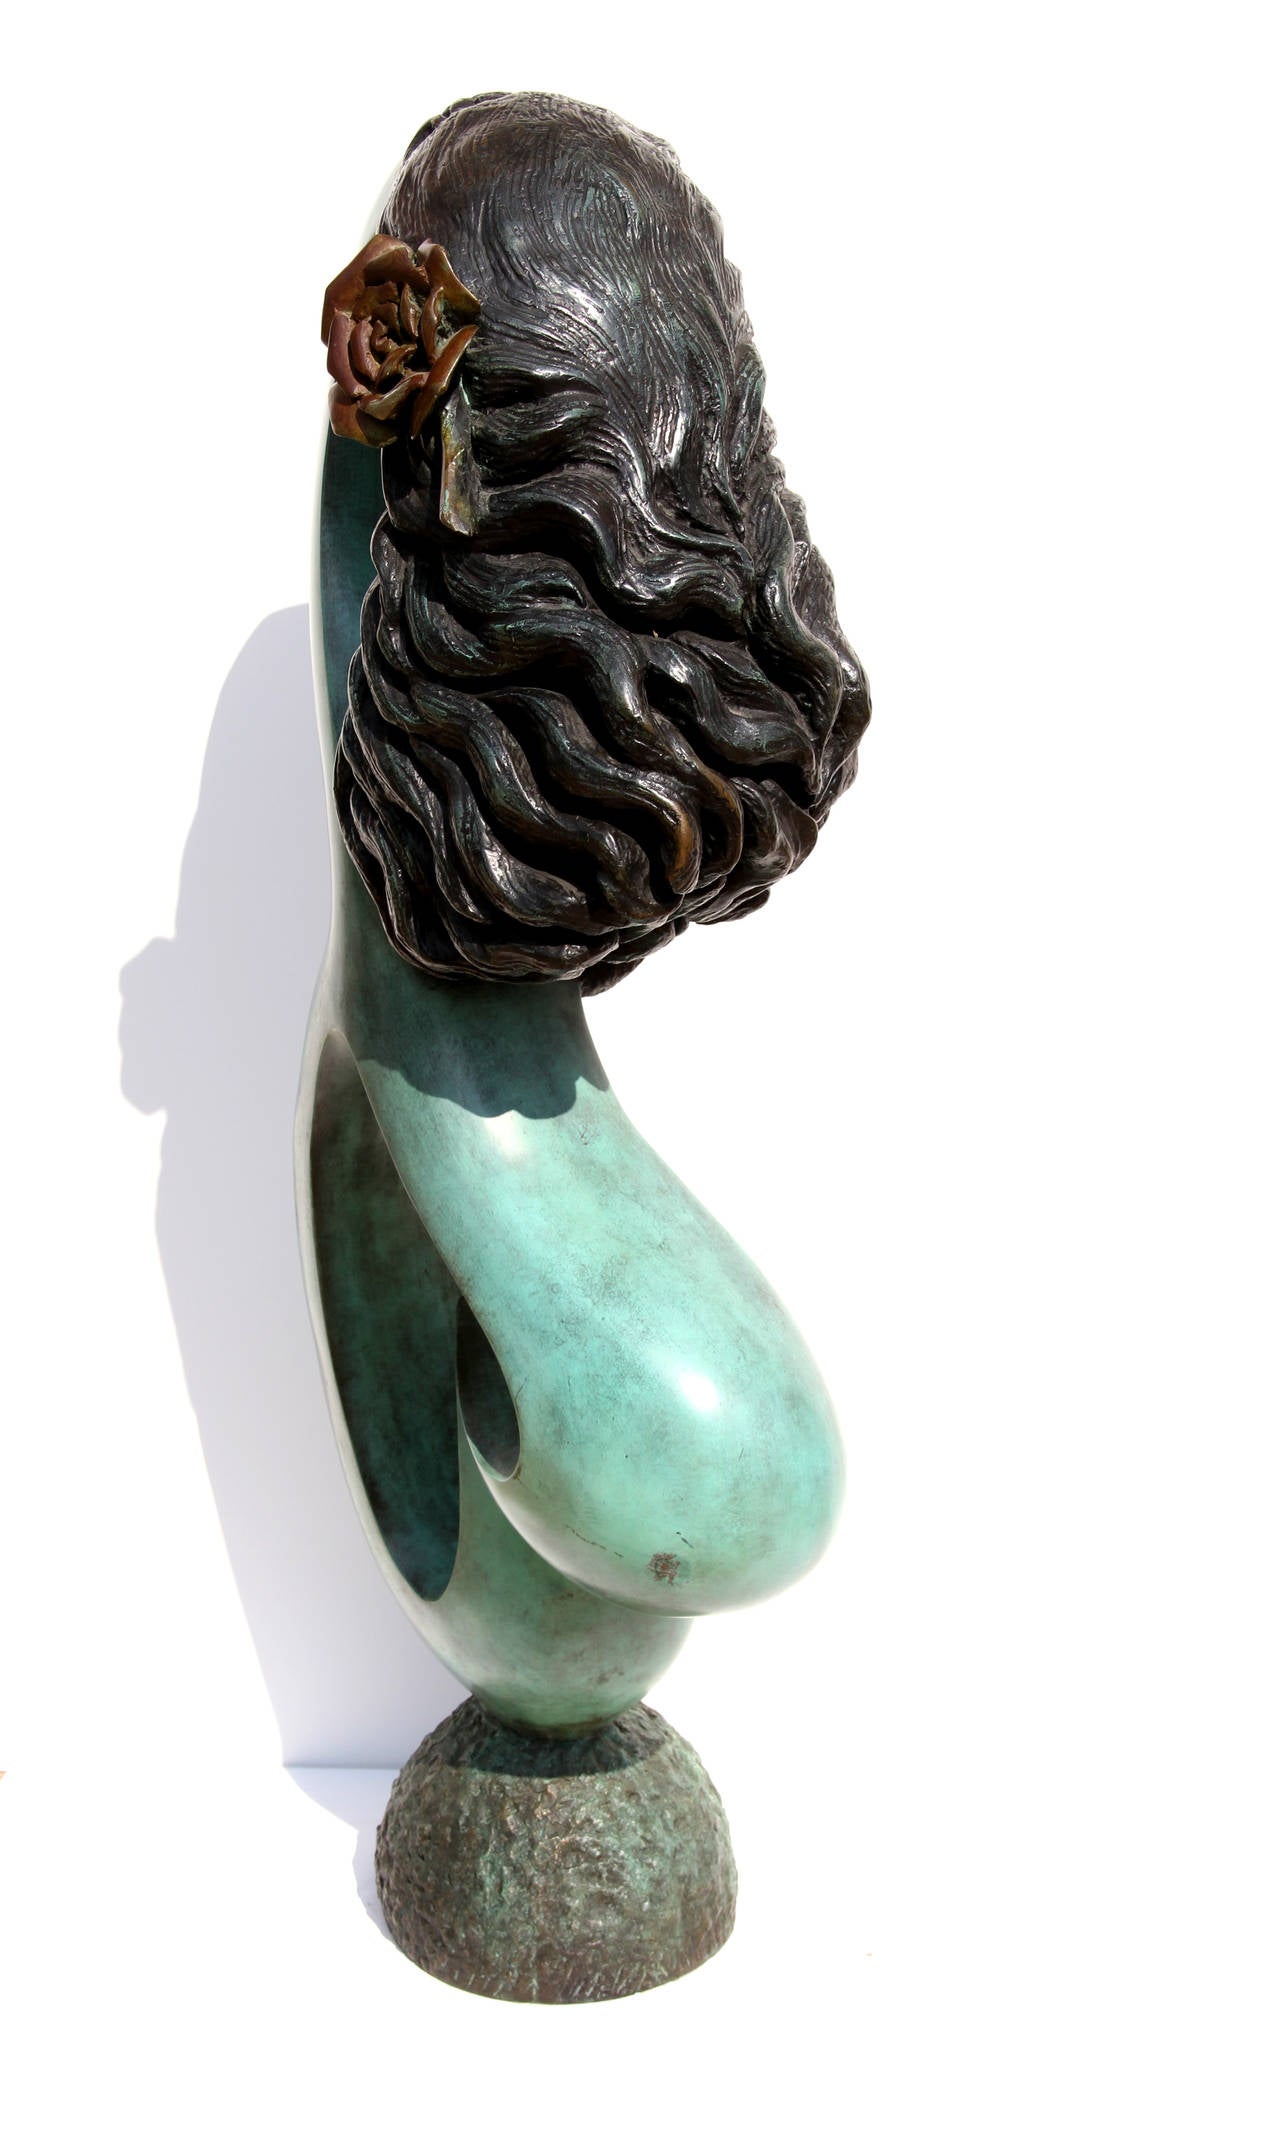 Artist: Ellen Brenner-Sorensen, American
Title: Woman with Rose in Her Hair
Medium: Bronze Sculpture with Patina
Size: 45 in. x 17 in. x 8 in. (114.3 cm x 43.18 cm x 20.32 cm)